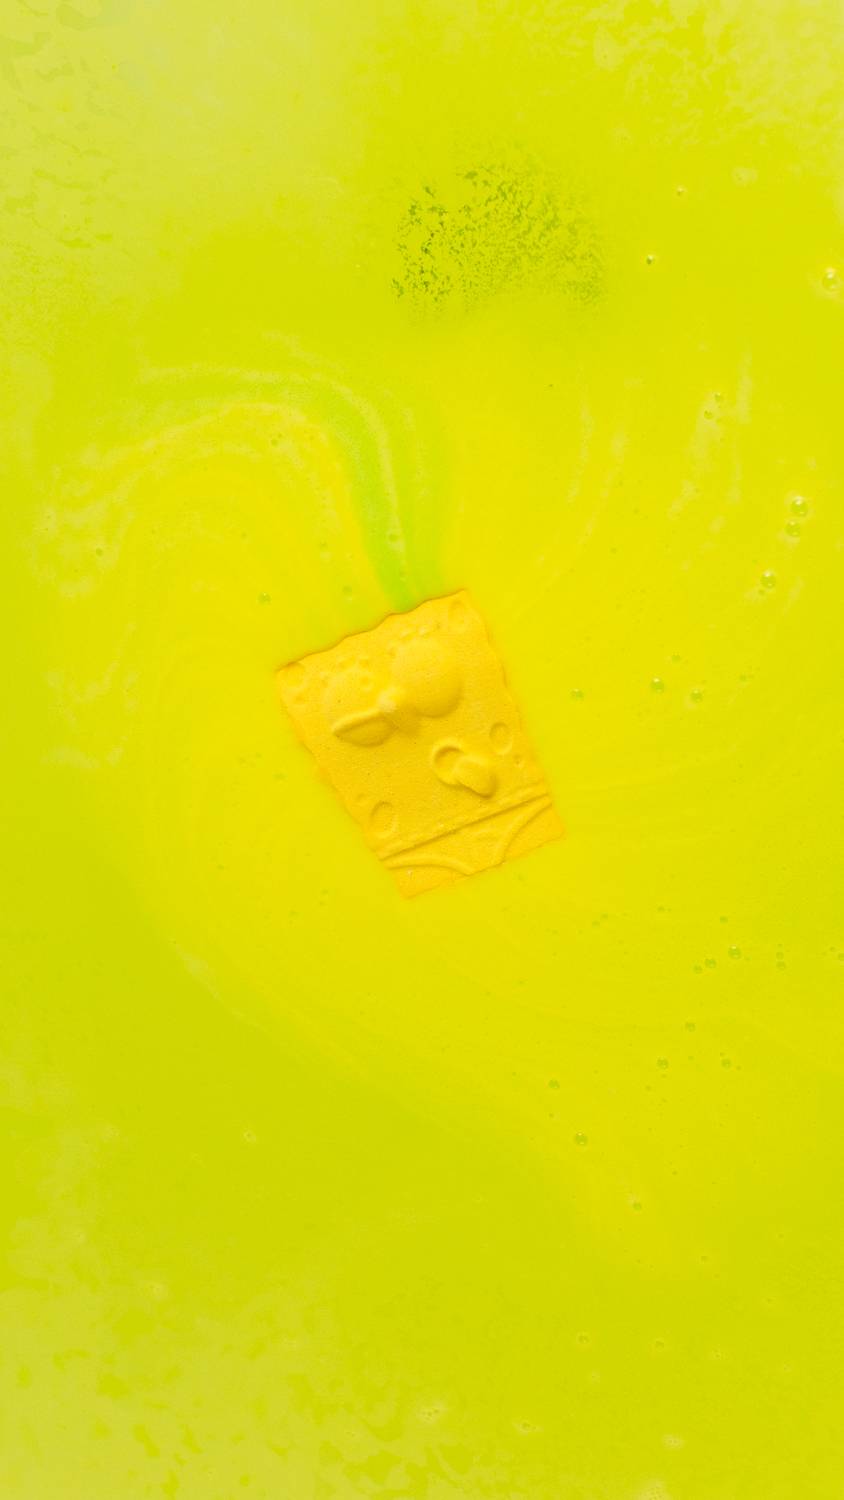 The Spongebob Bath Bomb fizzes among a luminous sea of yellow effervescent foam.